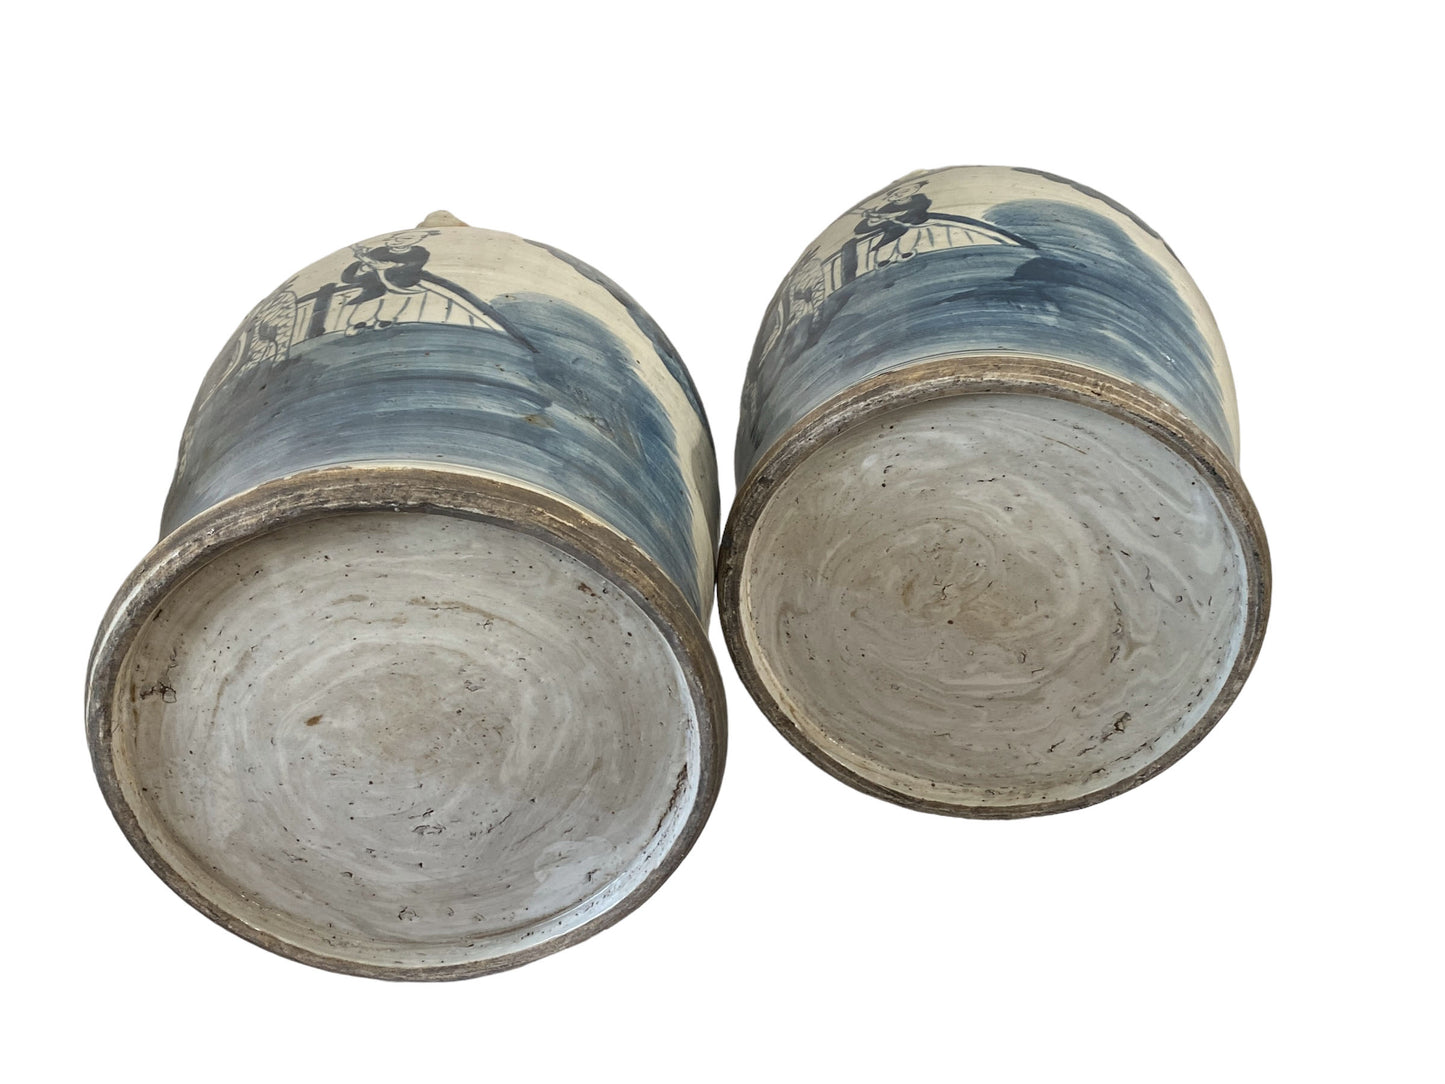 #207 Porcelain Lidded Blue & White Chinoiserie Ginger Jars - a Pair 18.5" H